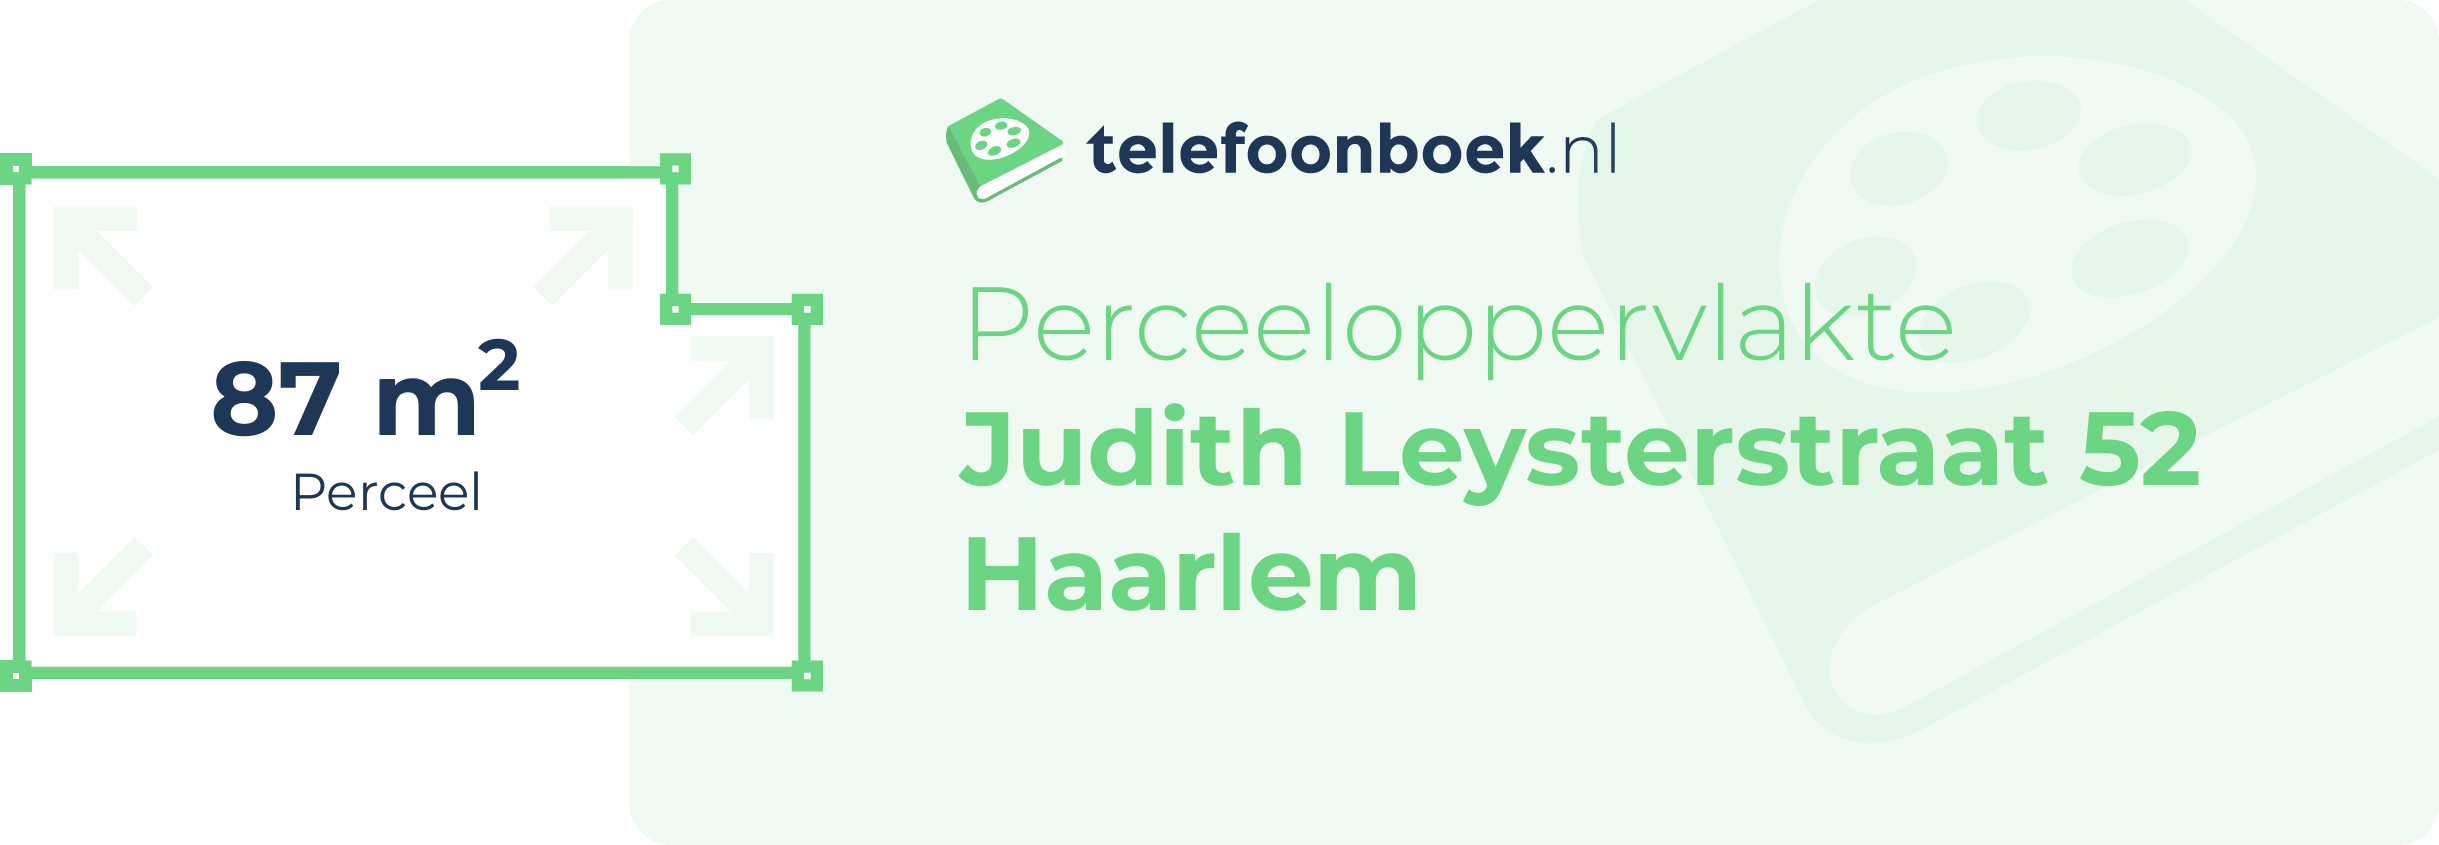 Perceeloppervlakte Judith Leysterstraat 52 Haarlem